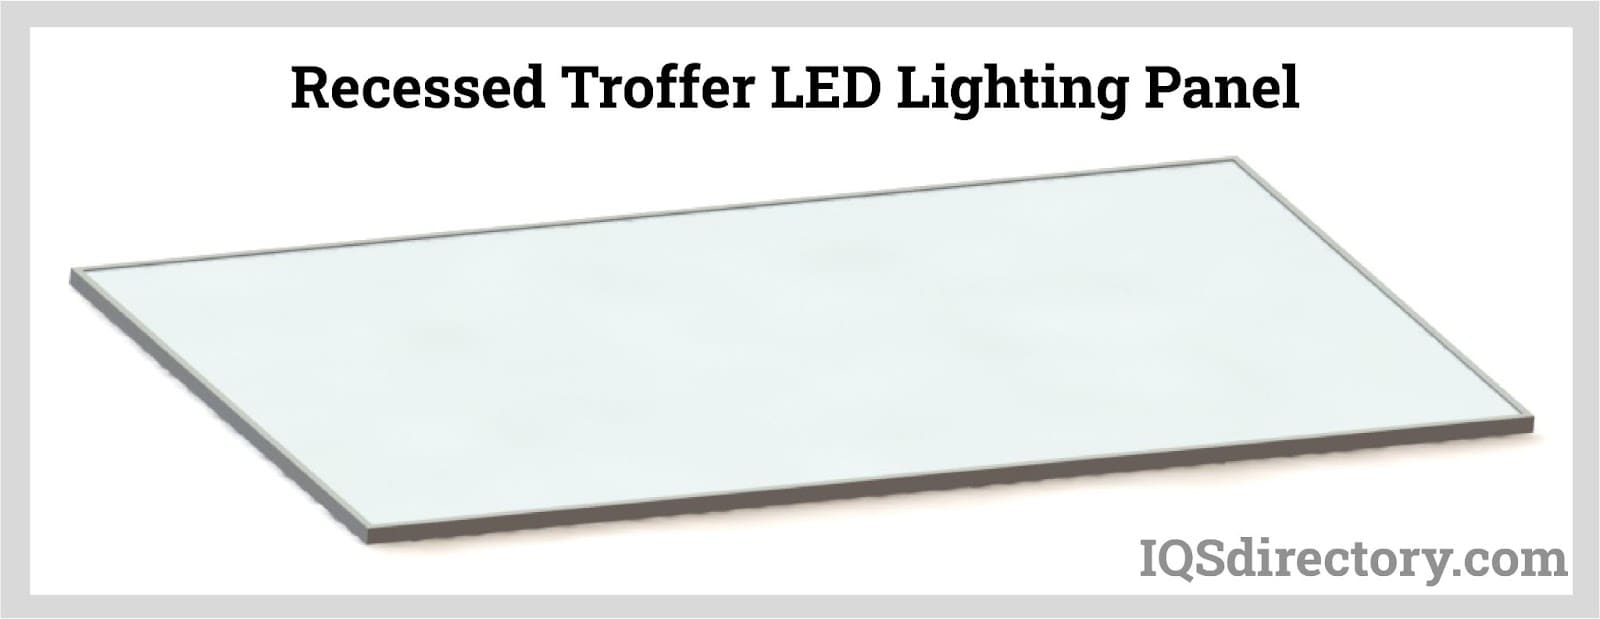 Recessed Troffer LED Lighting Panel